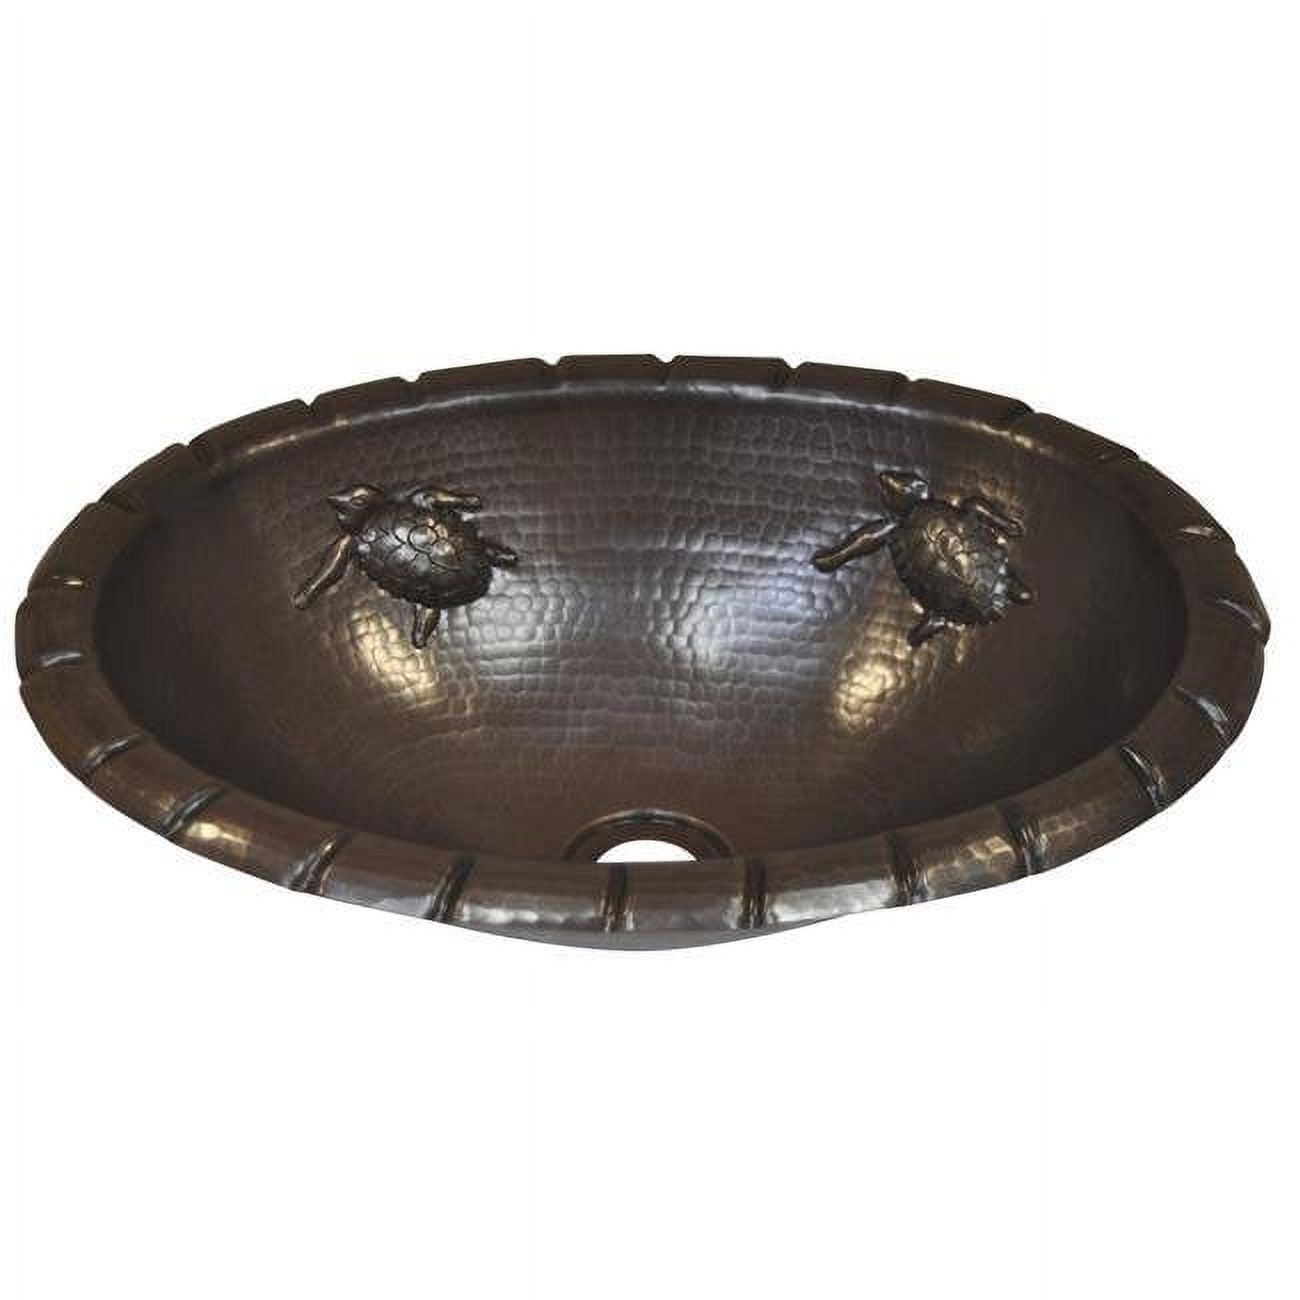 Cos-tt-17-fl-db Copper Oval Bath Sink, Dark Brown - Turtle Design - 5.5 X 10.5 X 17 In.